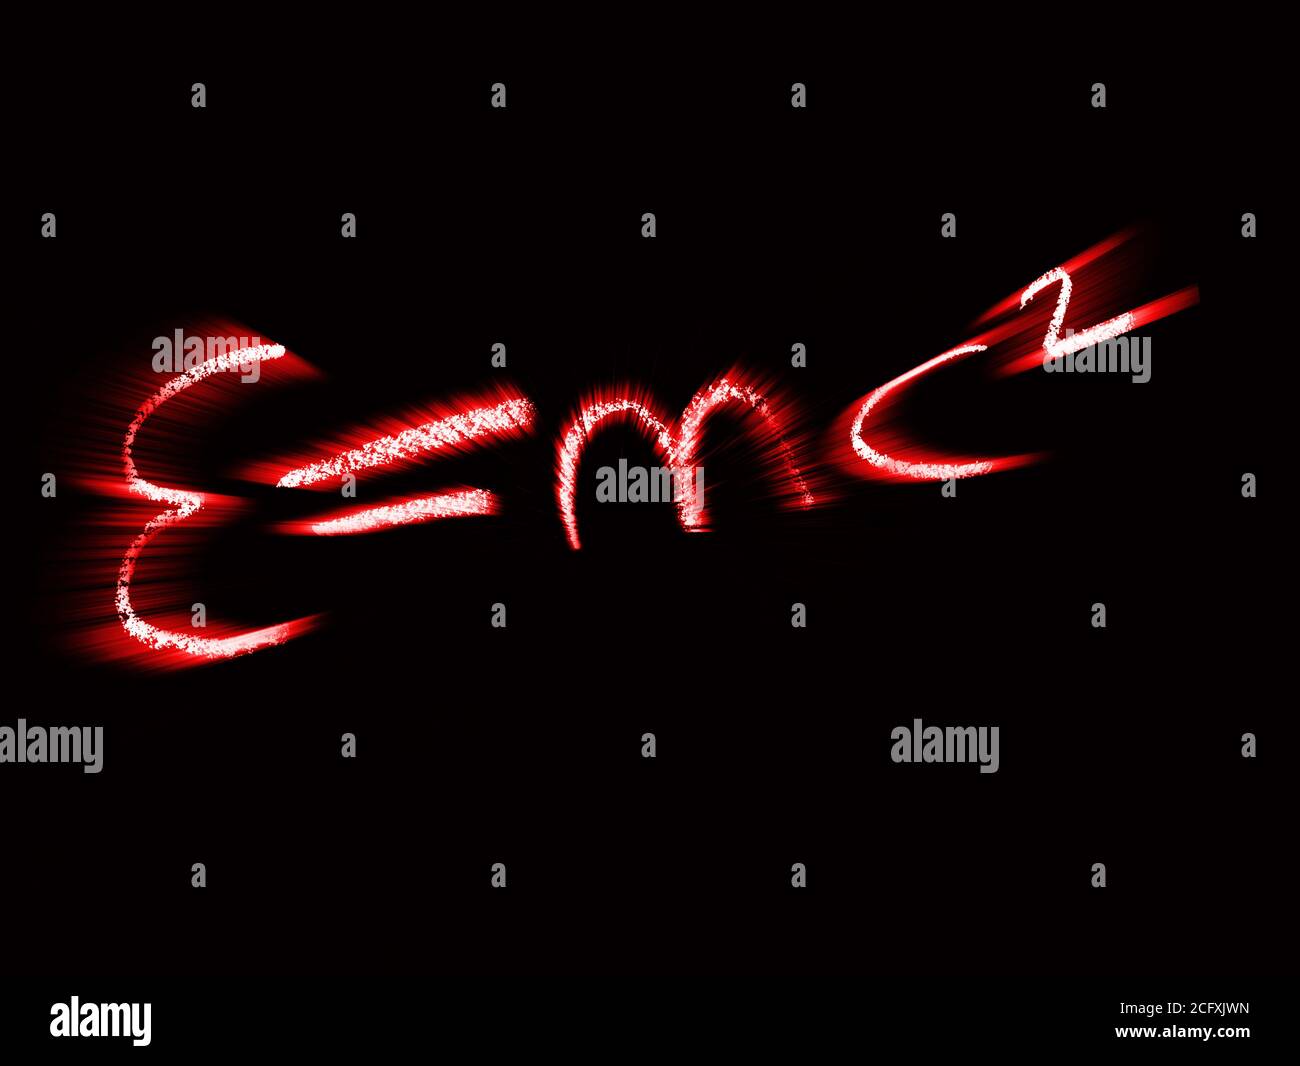 Zoomed image of E=mc2 on a black background Stock Photo